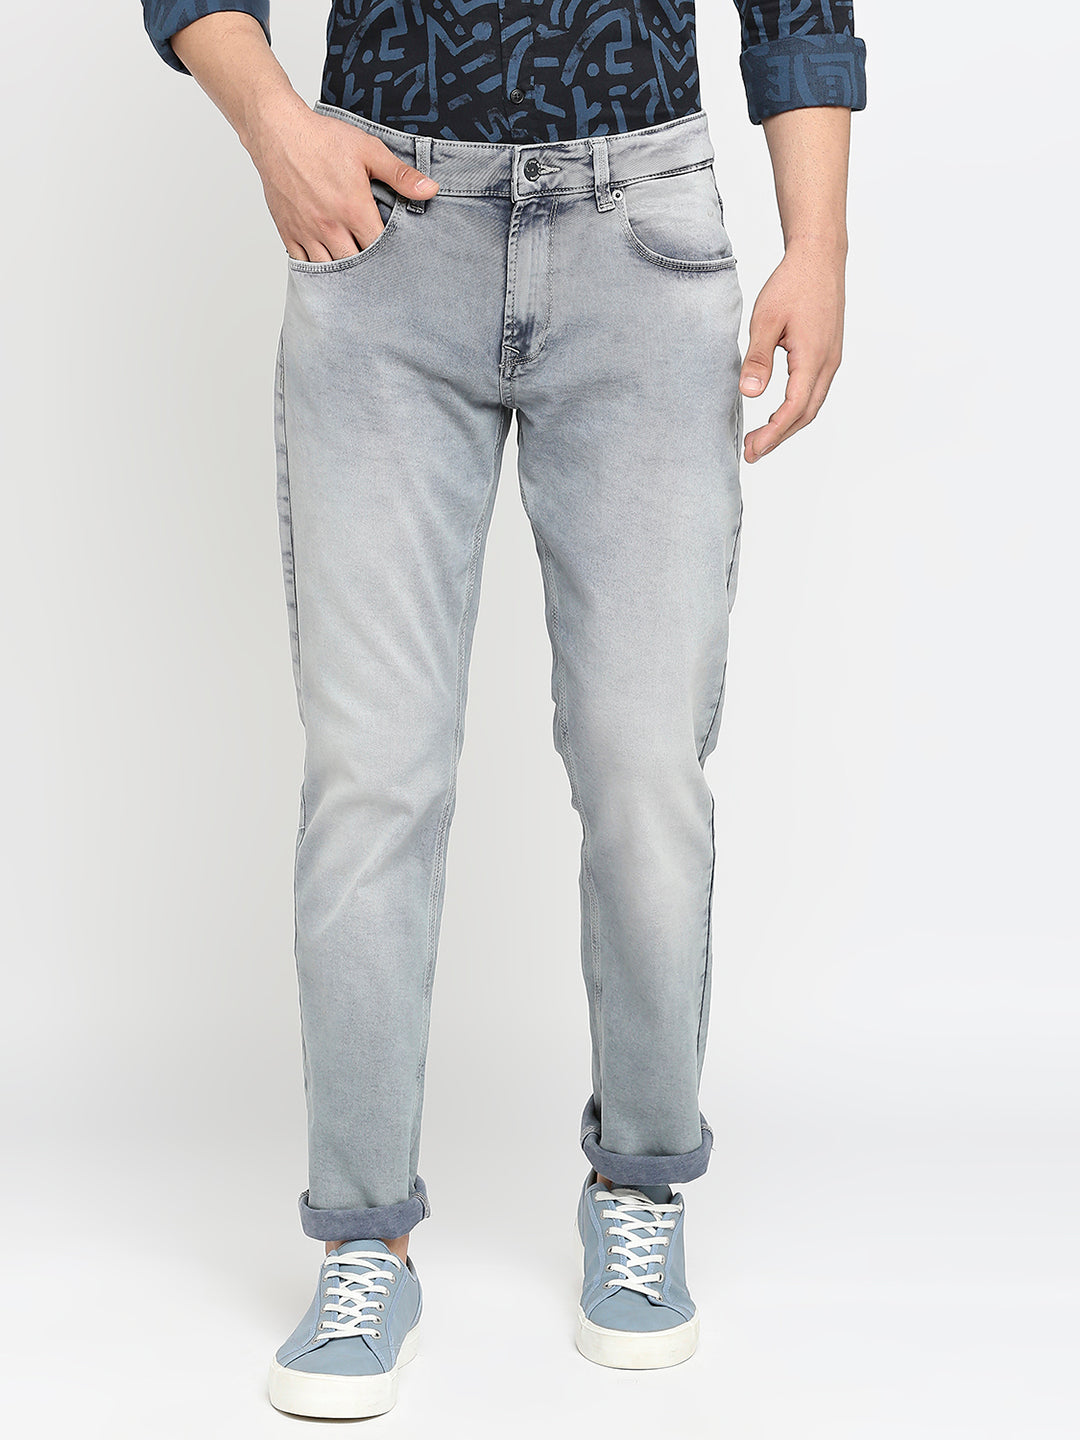 Men's Grey Ripped Skinny Jeans | Premium Denim Jeans | Amicci